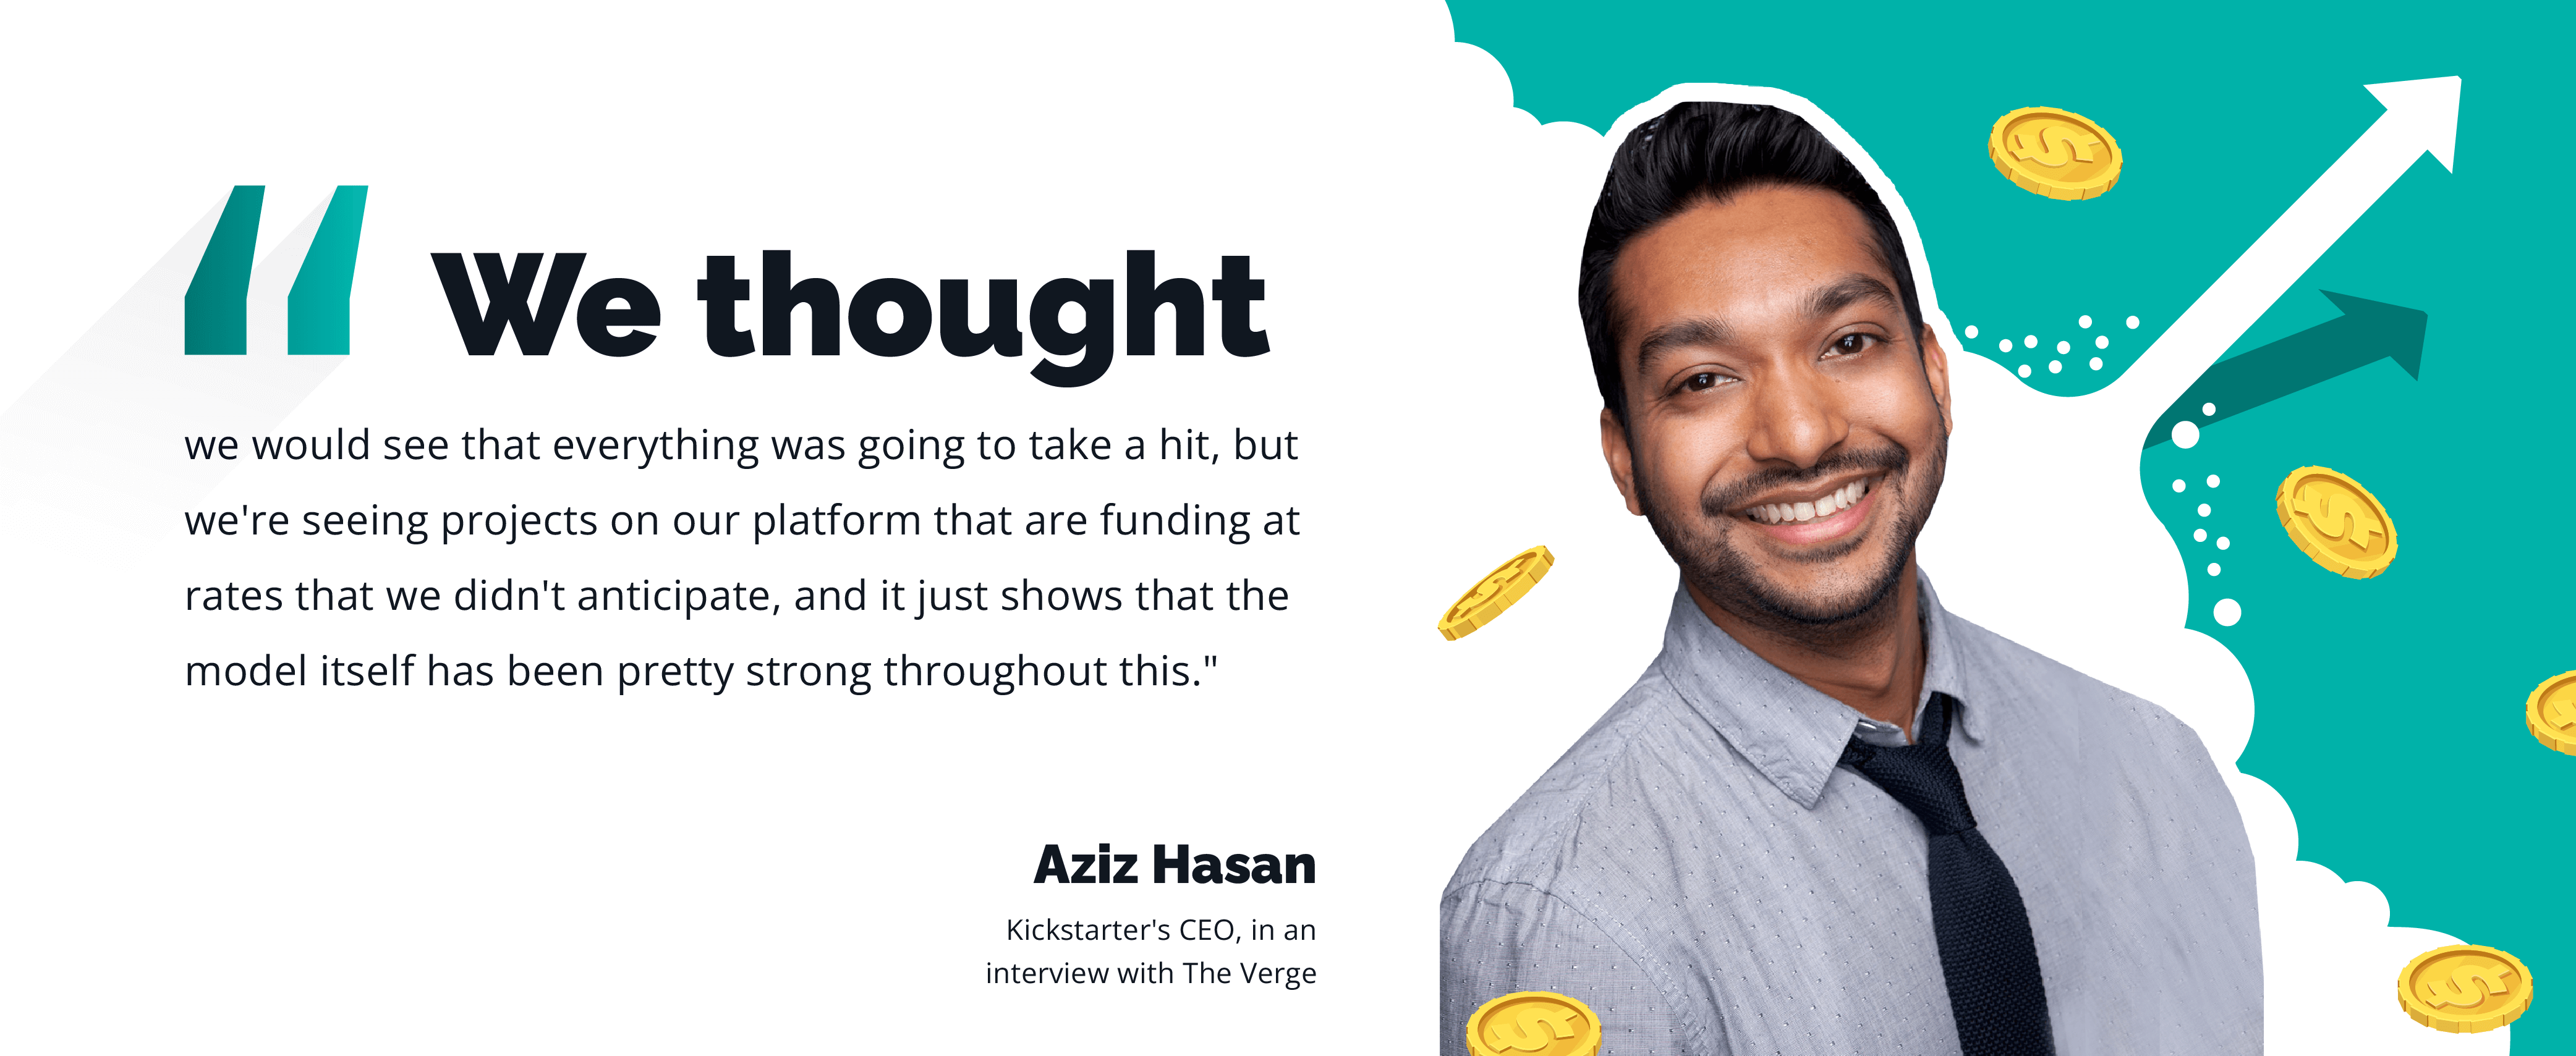 Kickstarter's CEO Aziz Hasan